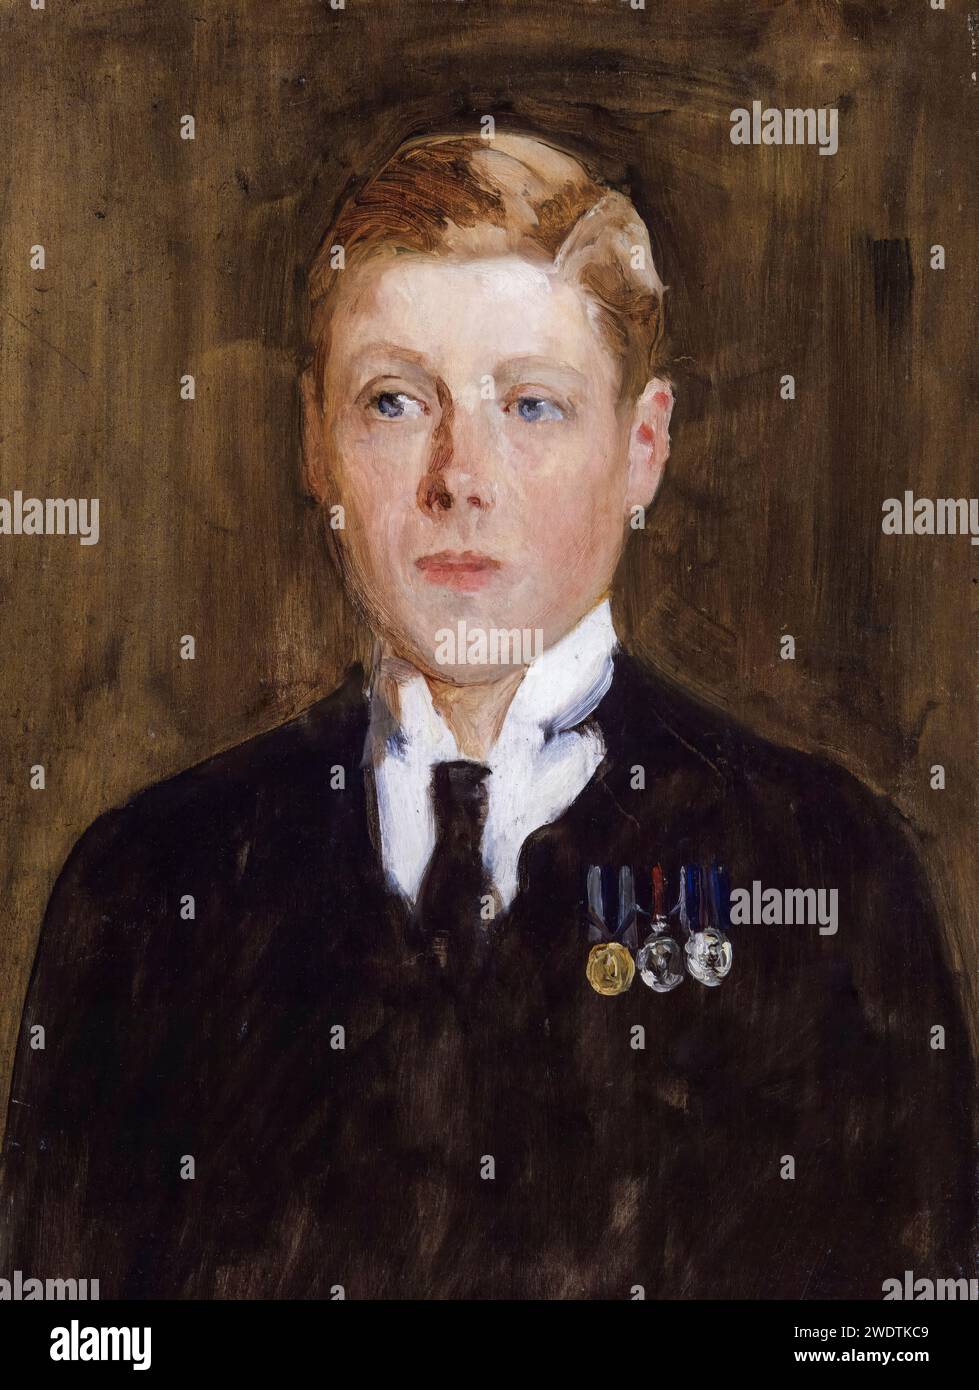 Prince Edward (1894-1972), Duke of Windsor (later, King Edward VIII), portrait painting in oil on panel by Solomon Joseph Solomon, 1914 Stock Photo